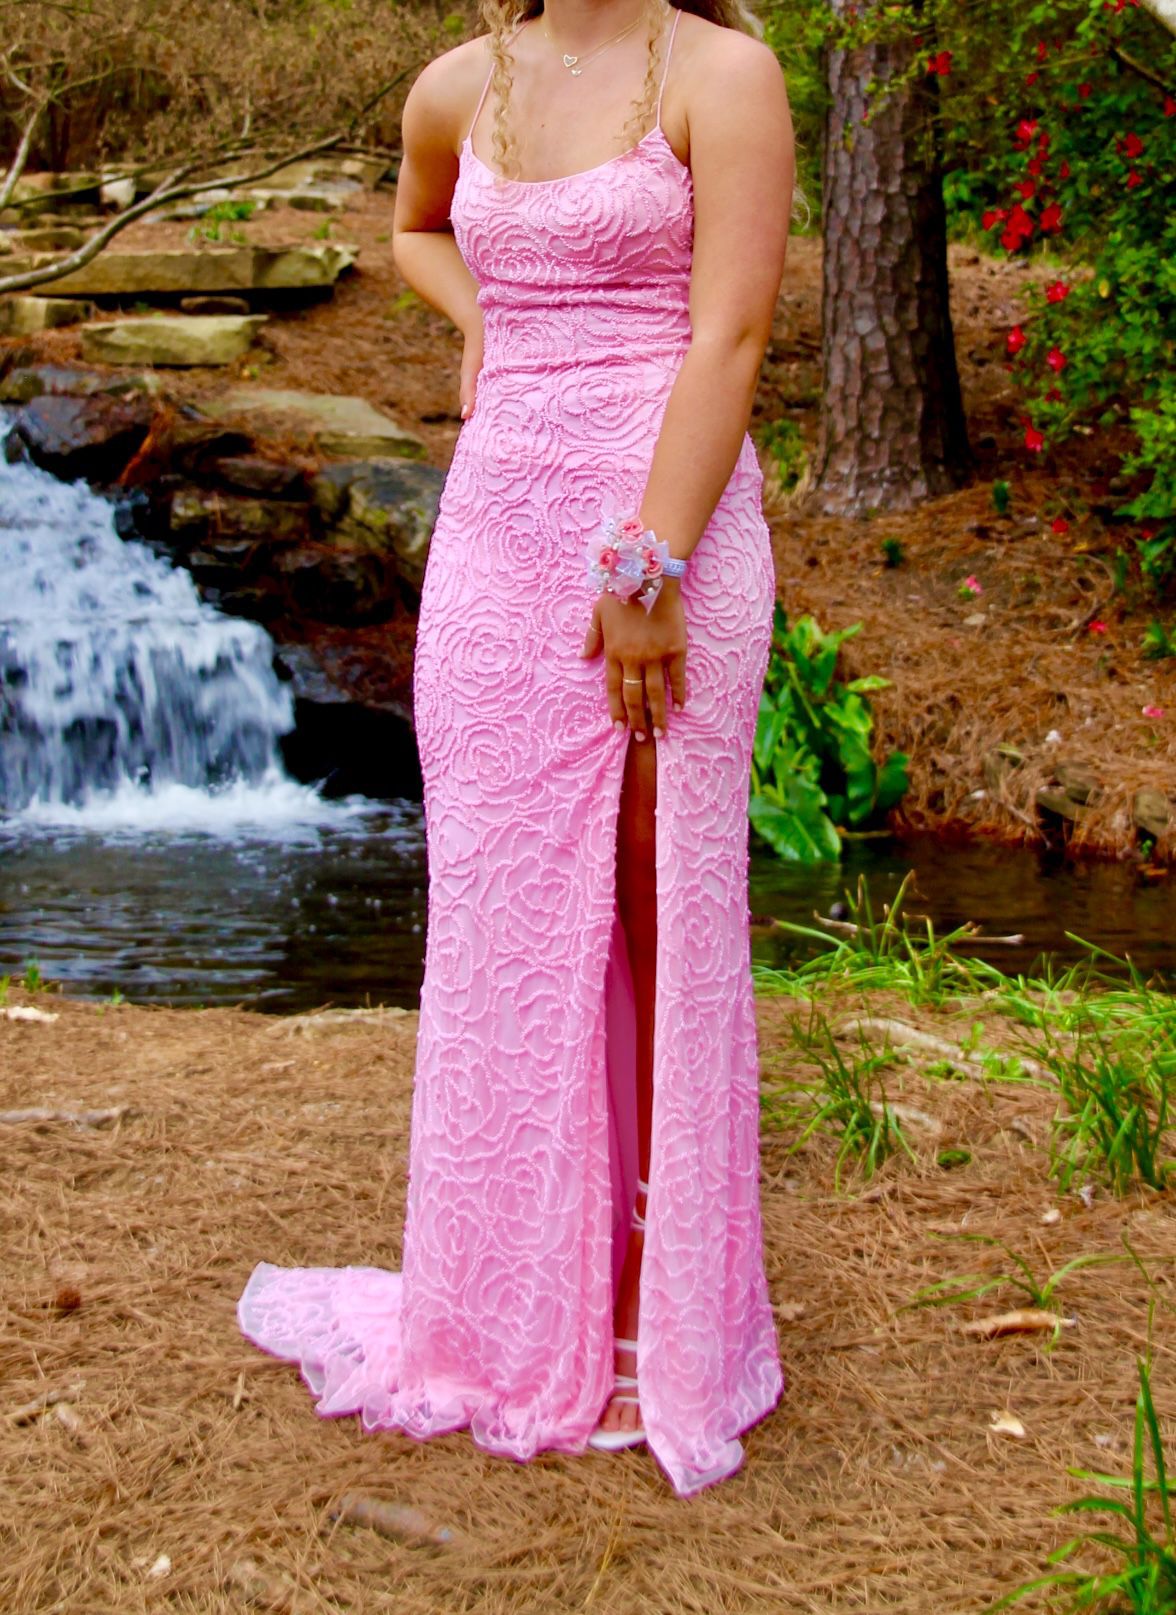 Prom Dress - Pink - Size 2